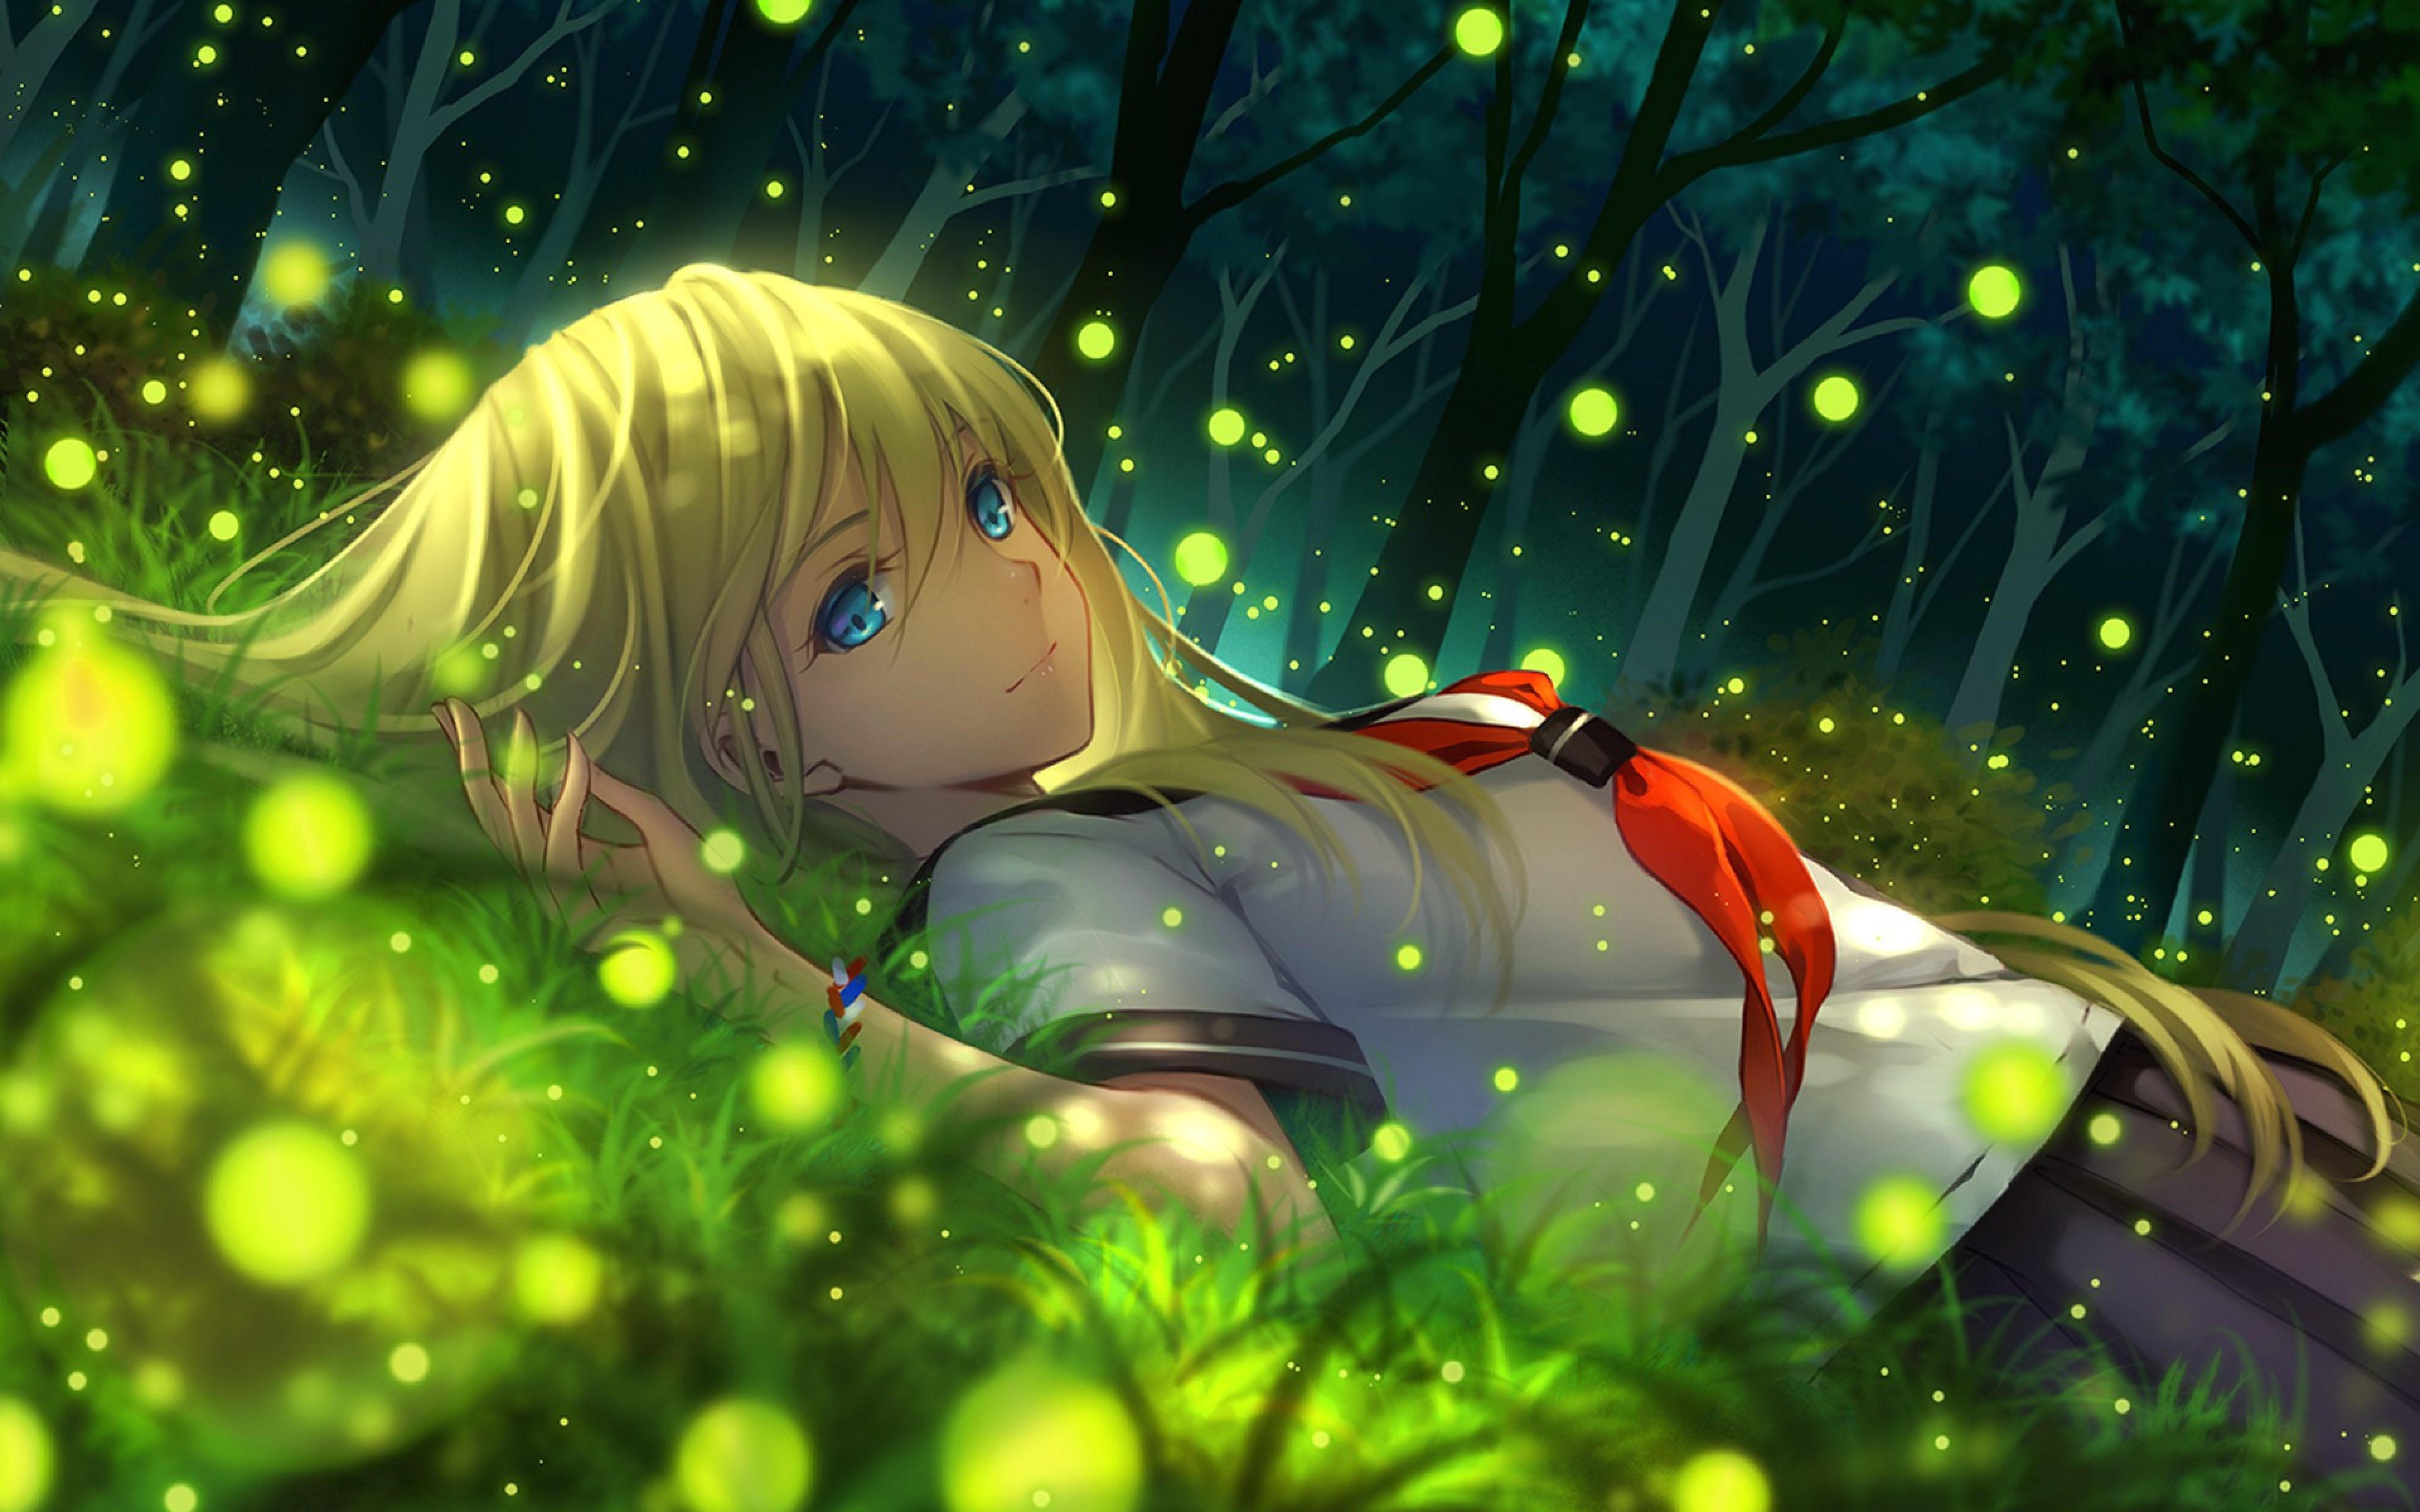 Anime 3840x2400 anime girls blue eyes anime blonde nature fireflies school uniform Tidsean Pixiv women outdoors outdoors lying down tie